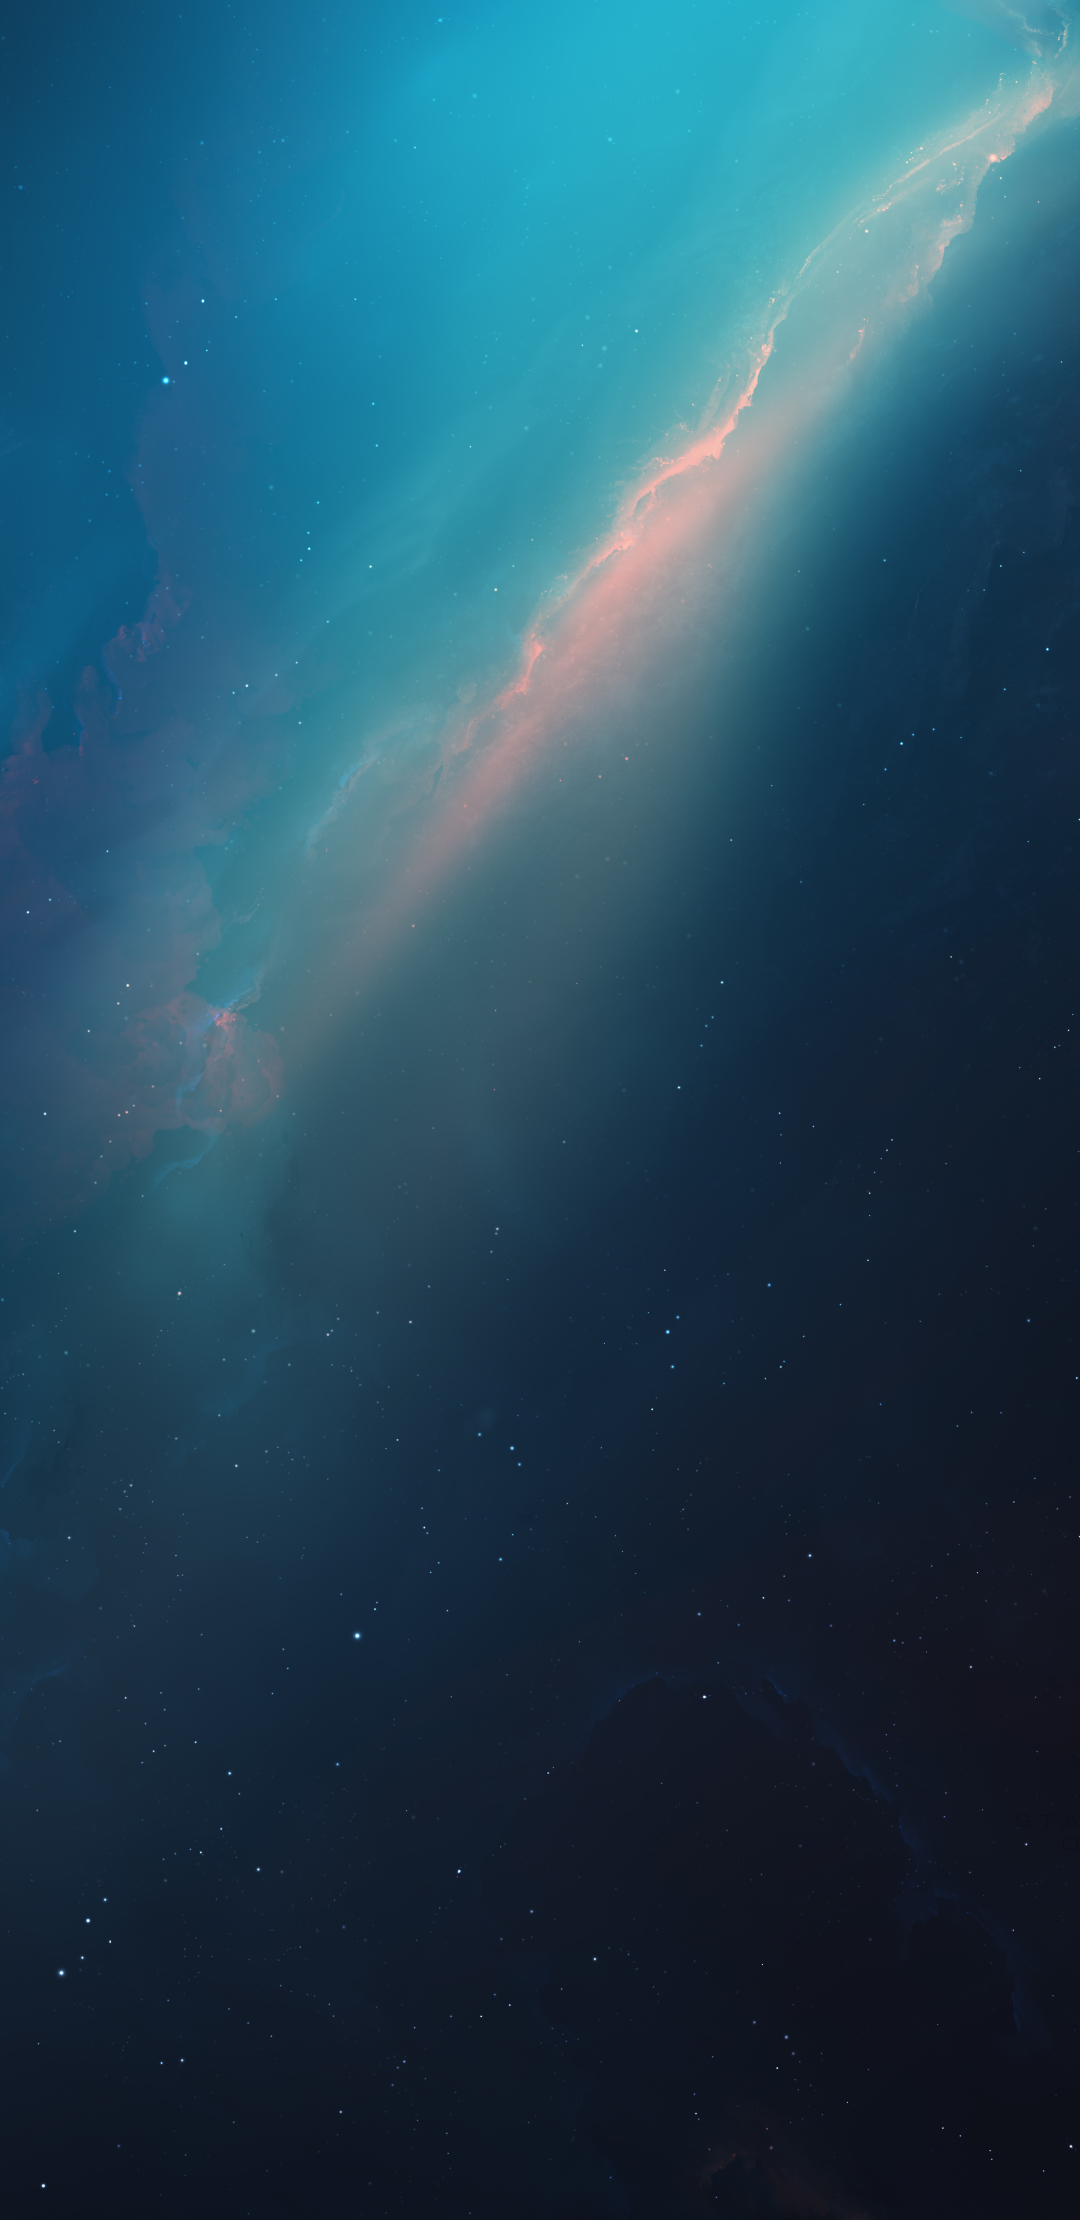 Ring Nebula Wallpaper  iDrop News